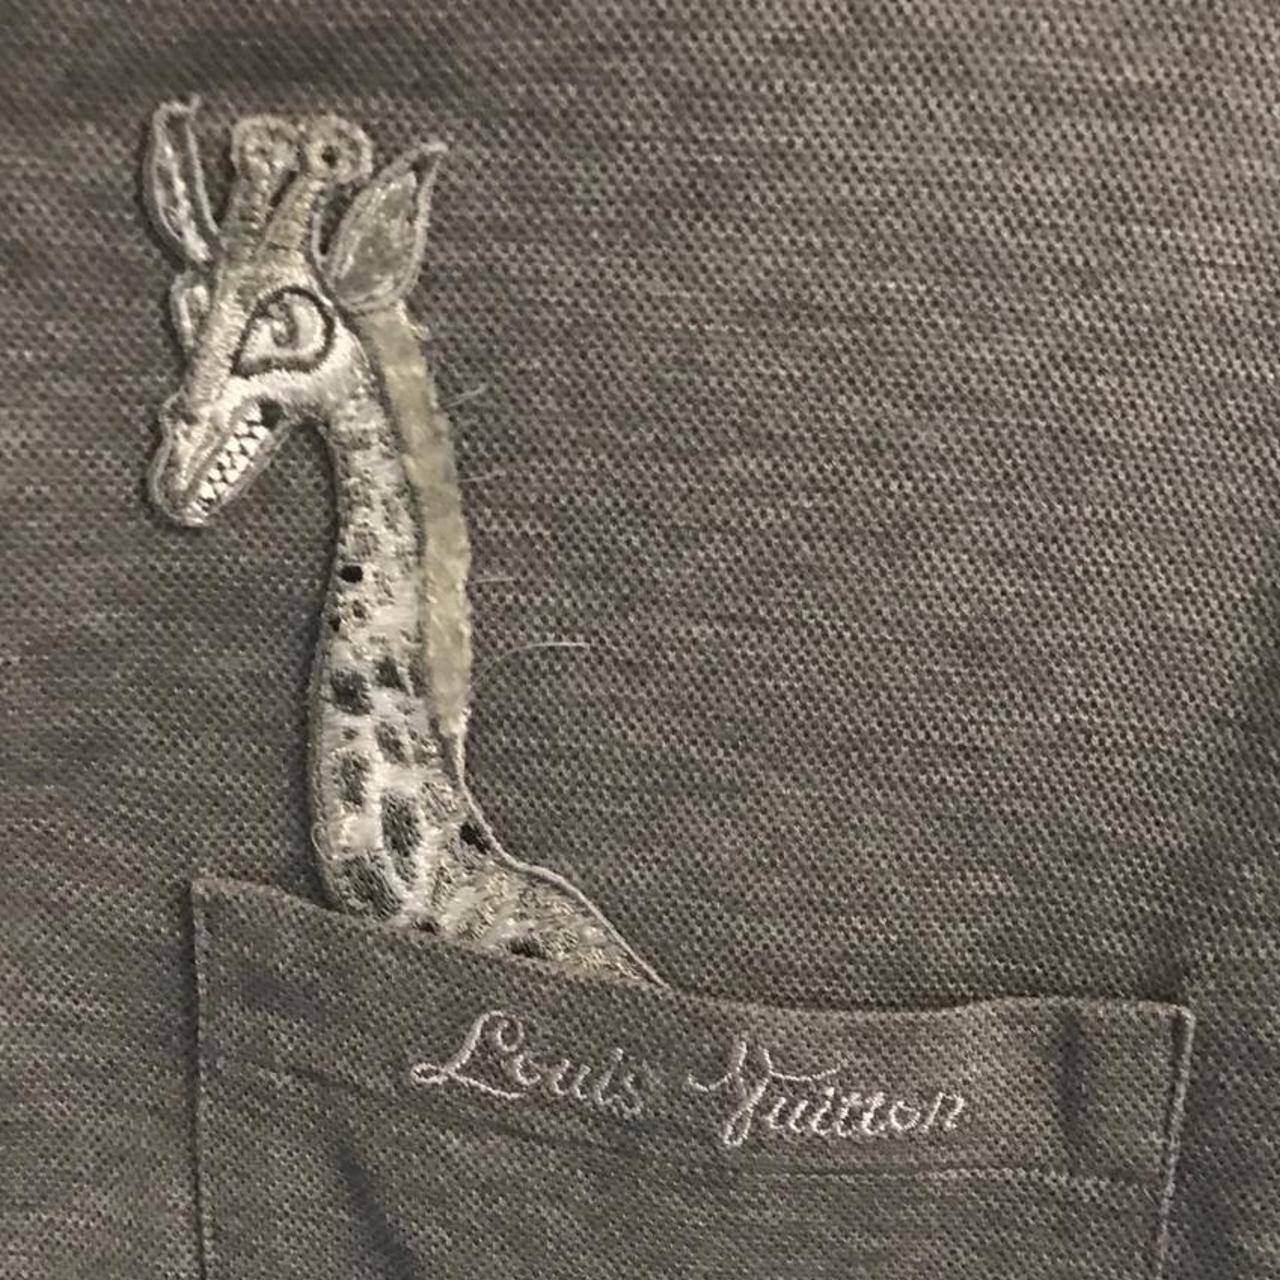 Louis Vuitton Men's Chapman Monogram Animals Polo